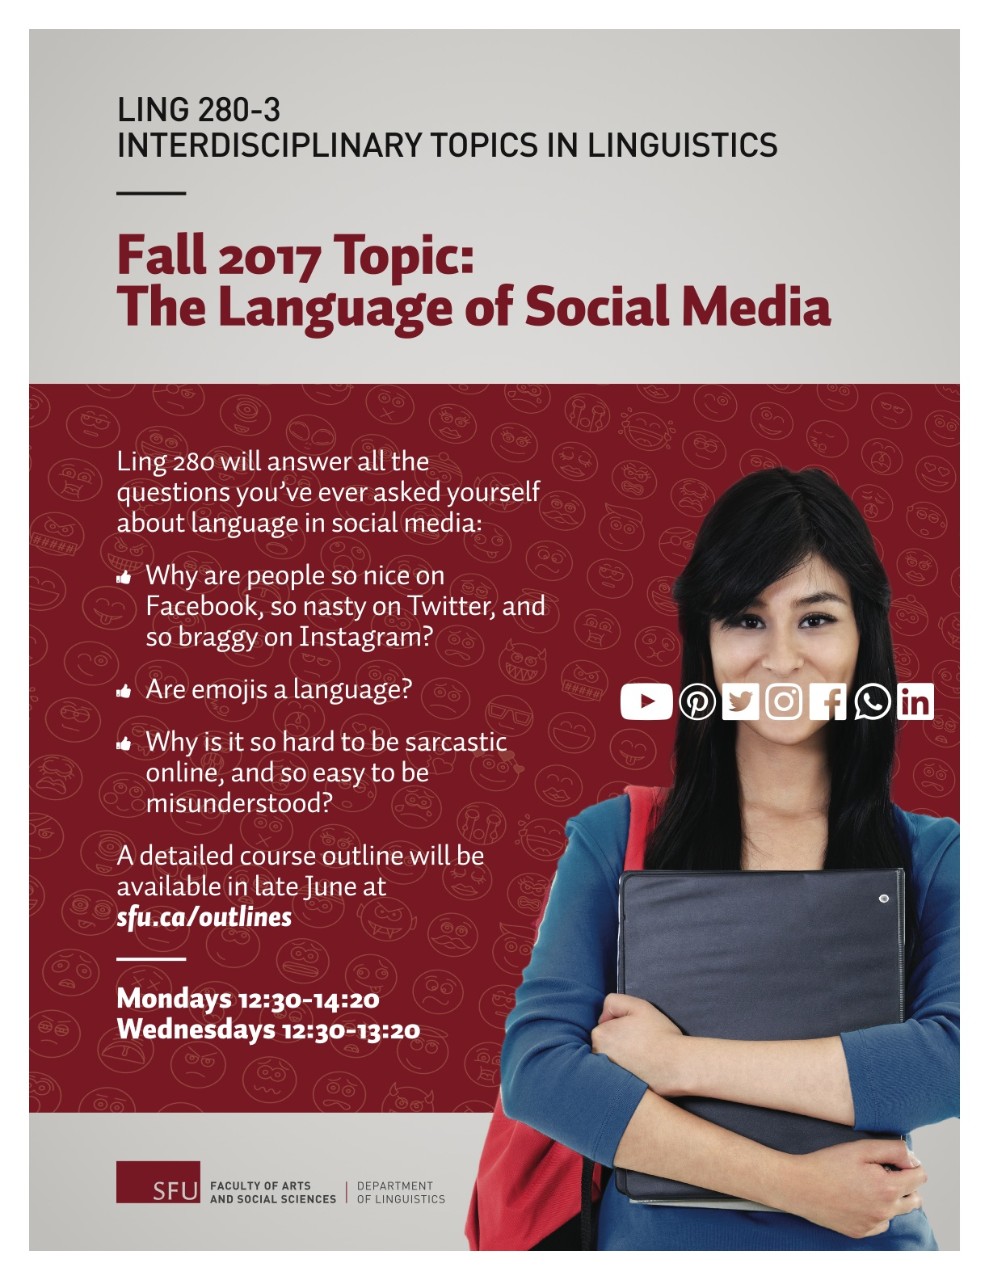 LING 280-3 Interdisciplinary Topics in Linguistics Fall 2017 Topic: The Language of Social Media with Dr. Maite Taboada